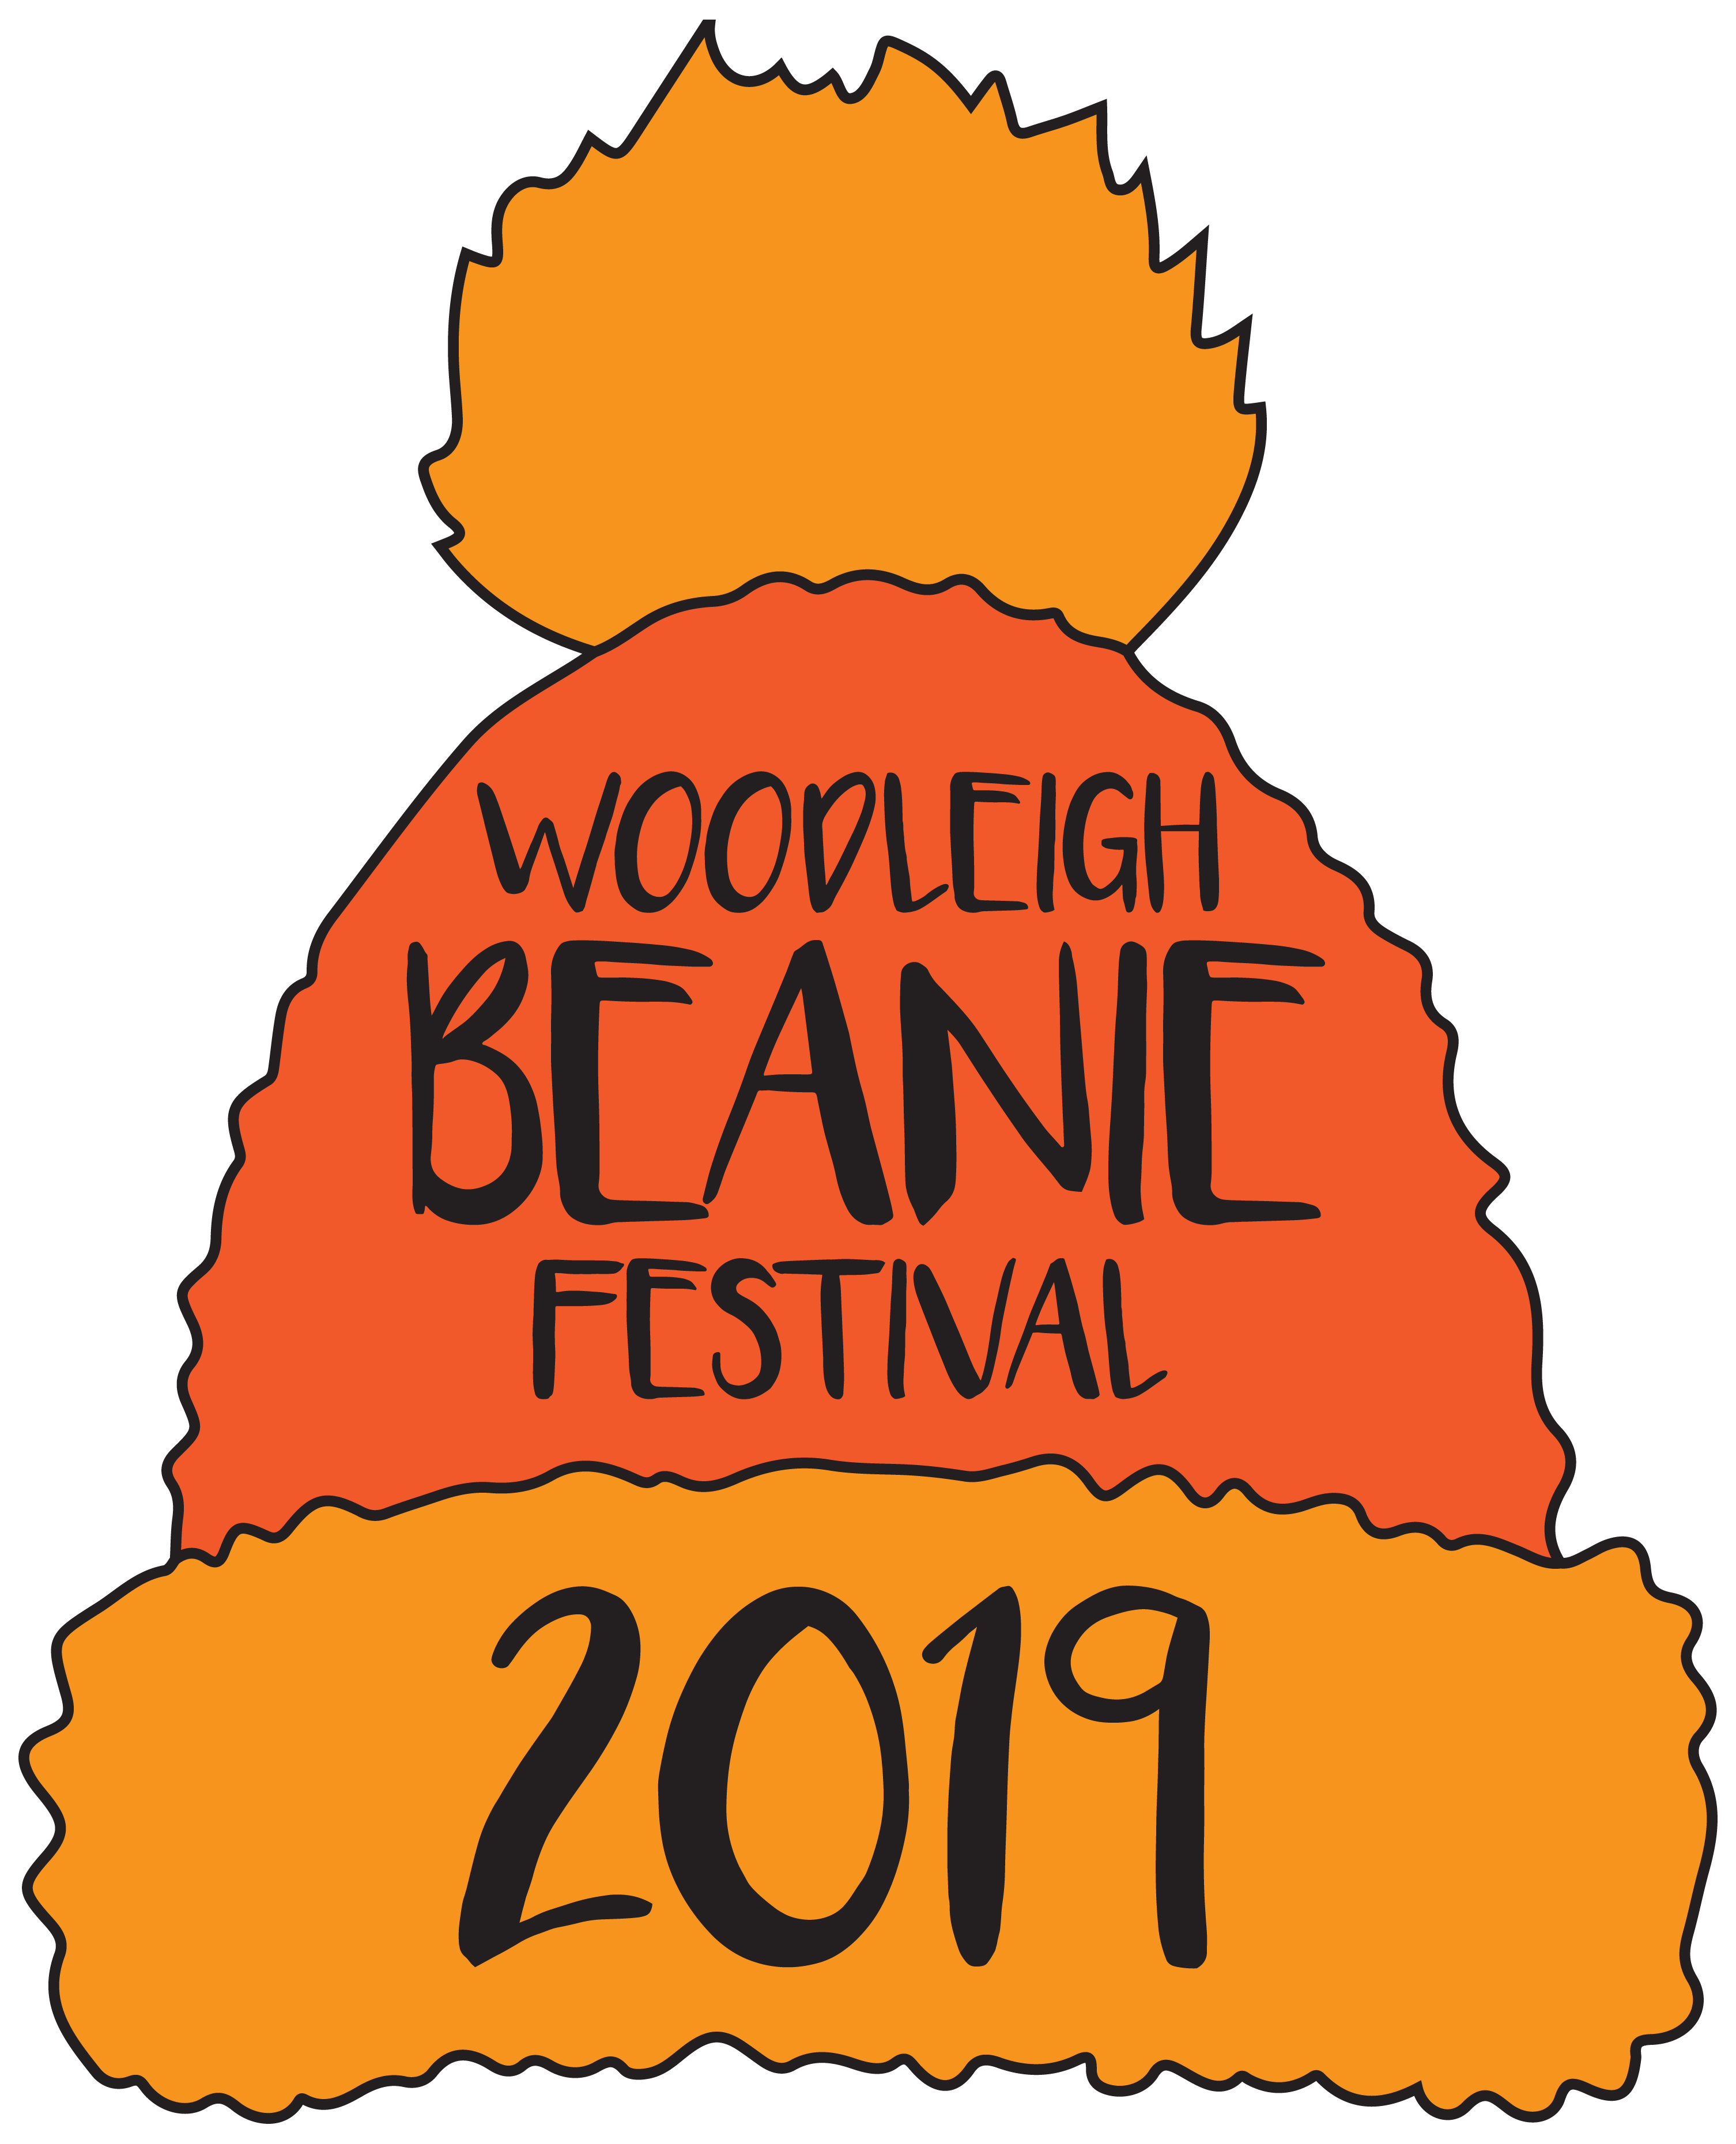 Woodleigh Beanie Festival